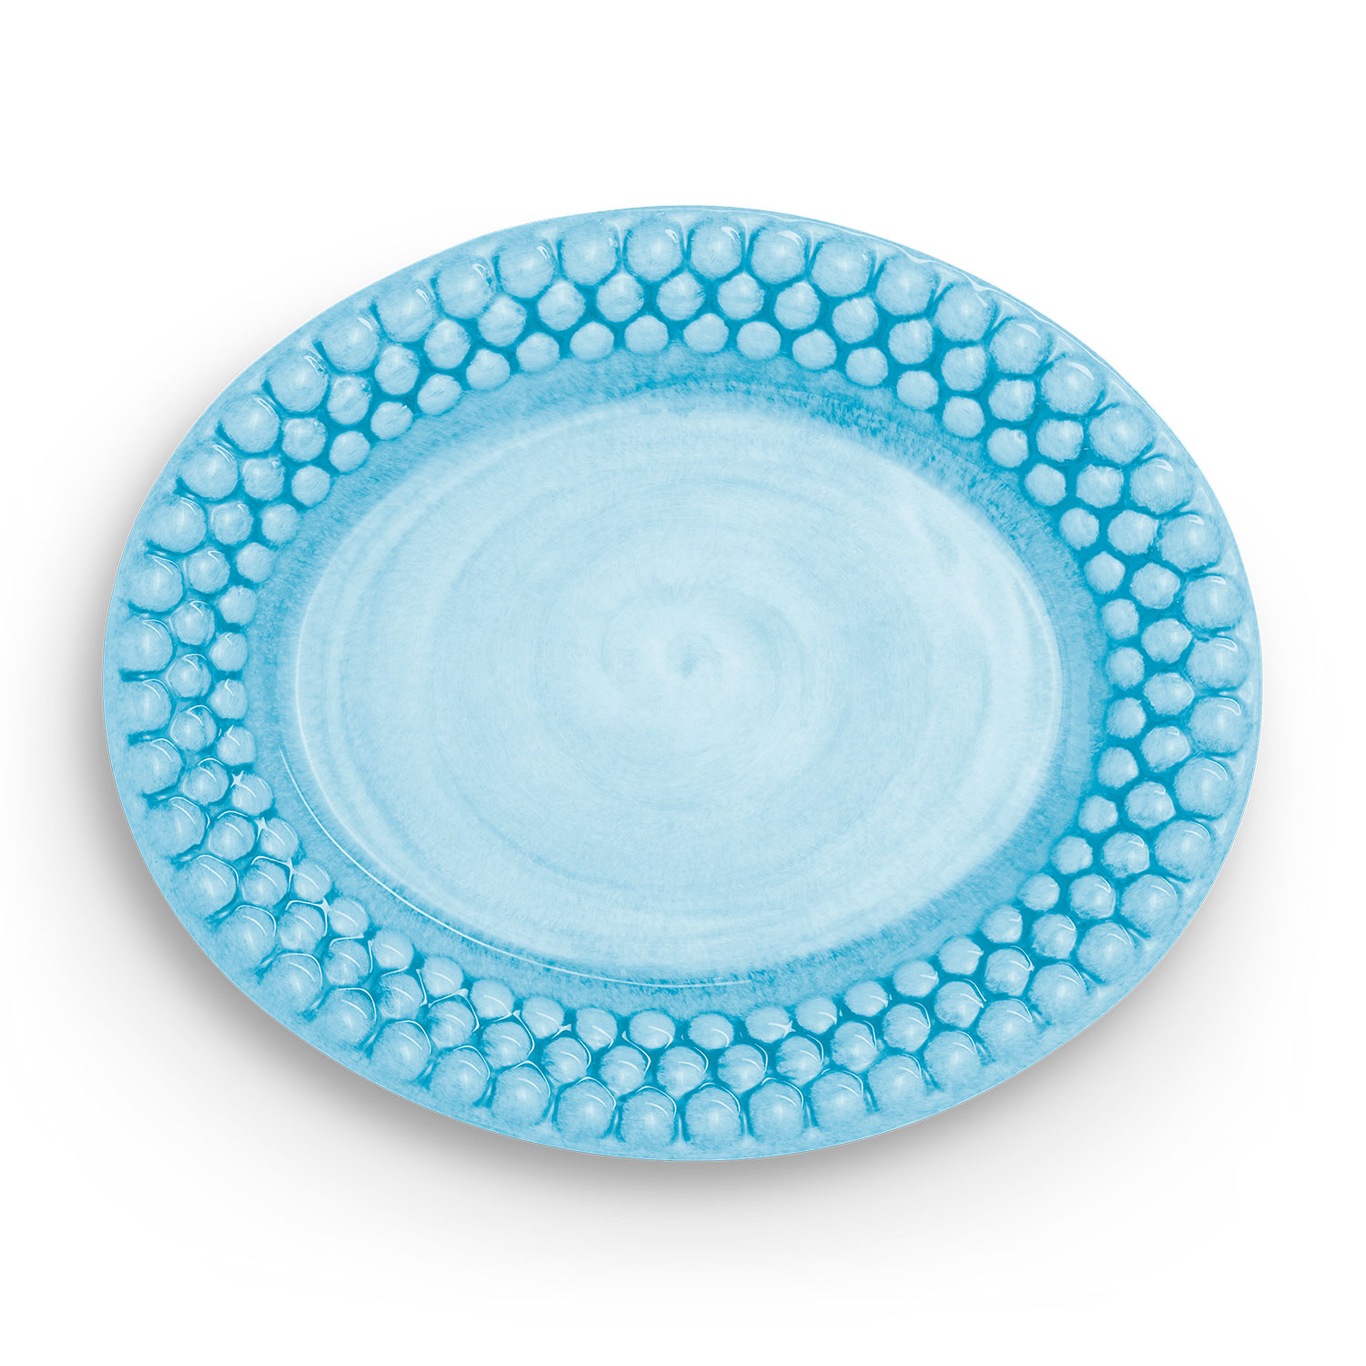 Bubbles Oval Plate 20 cm, Turquoise